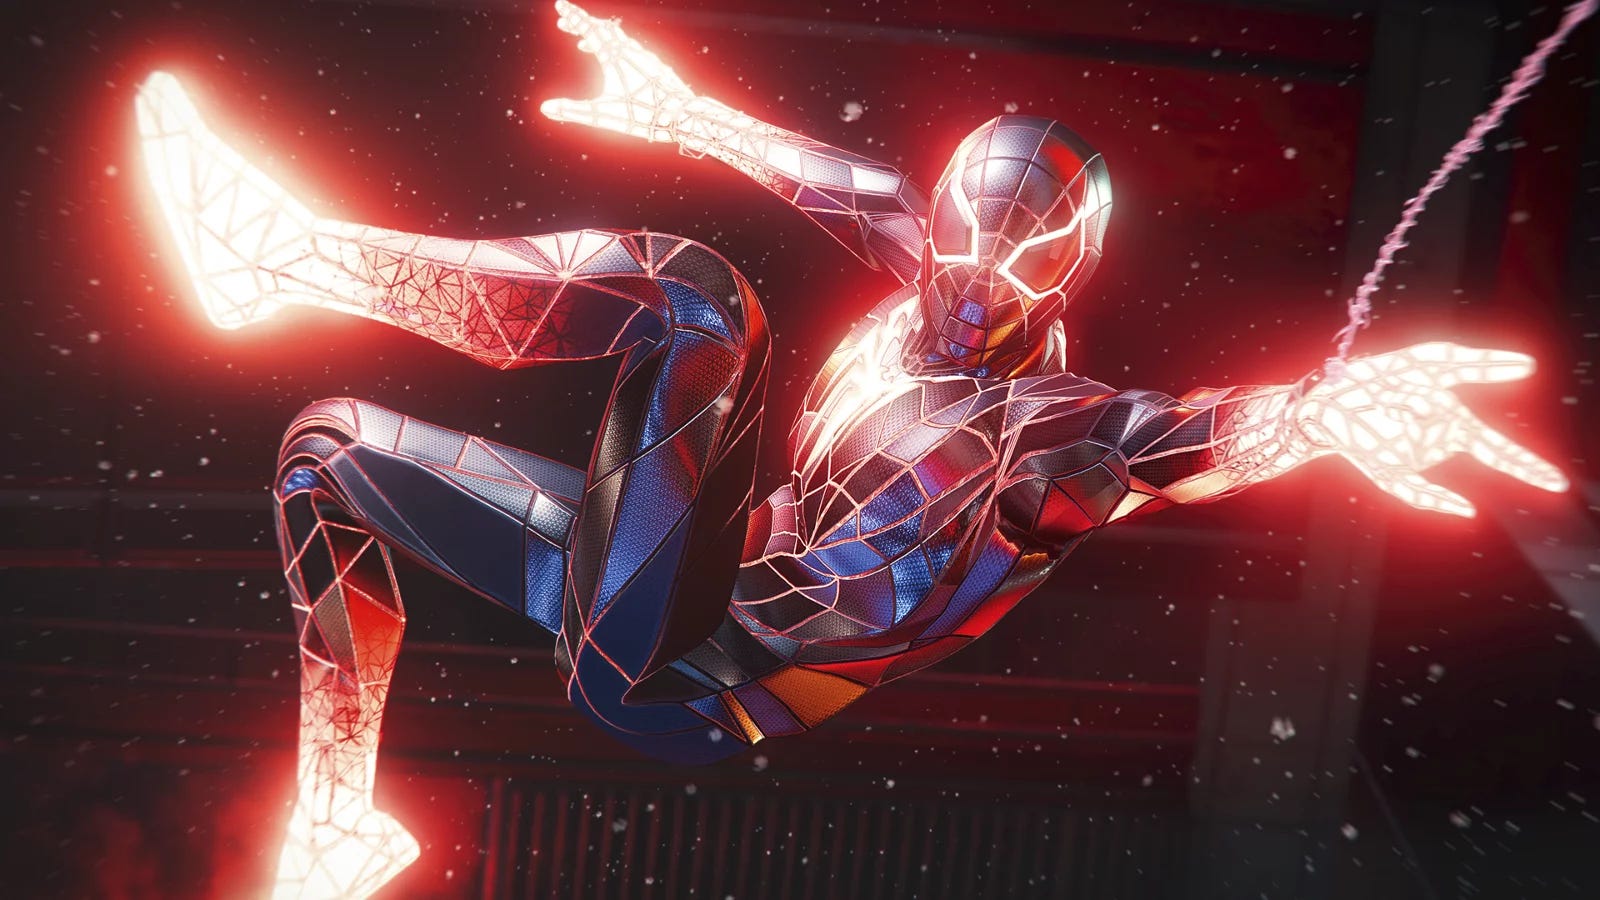 Spider-Man: Miles Morales Review - Narrative Is Diverse, Joyful